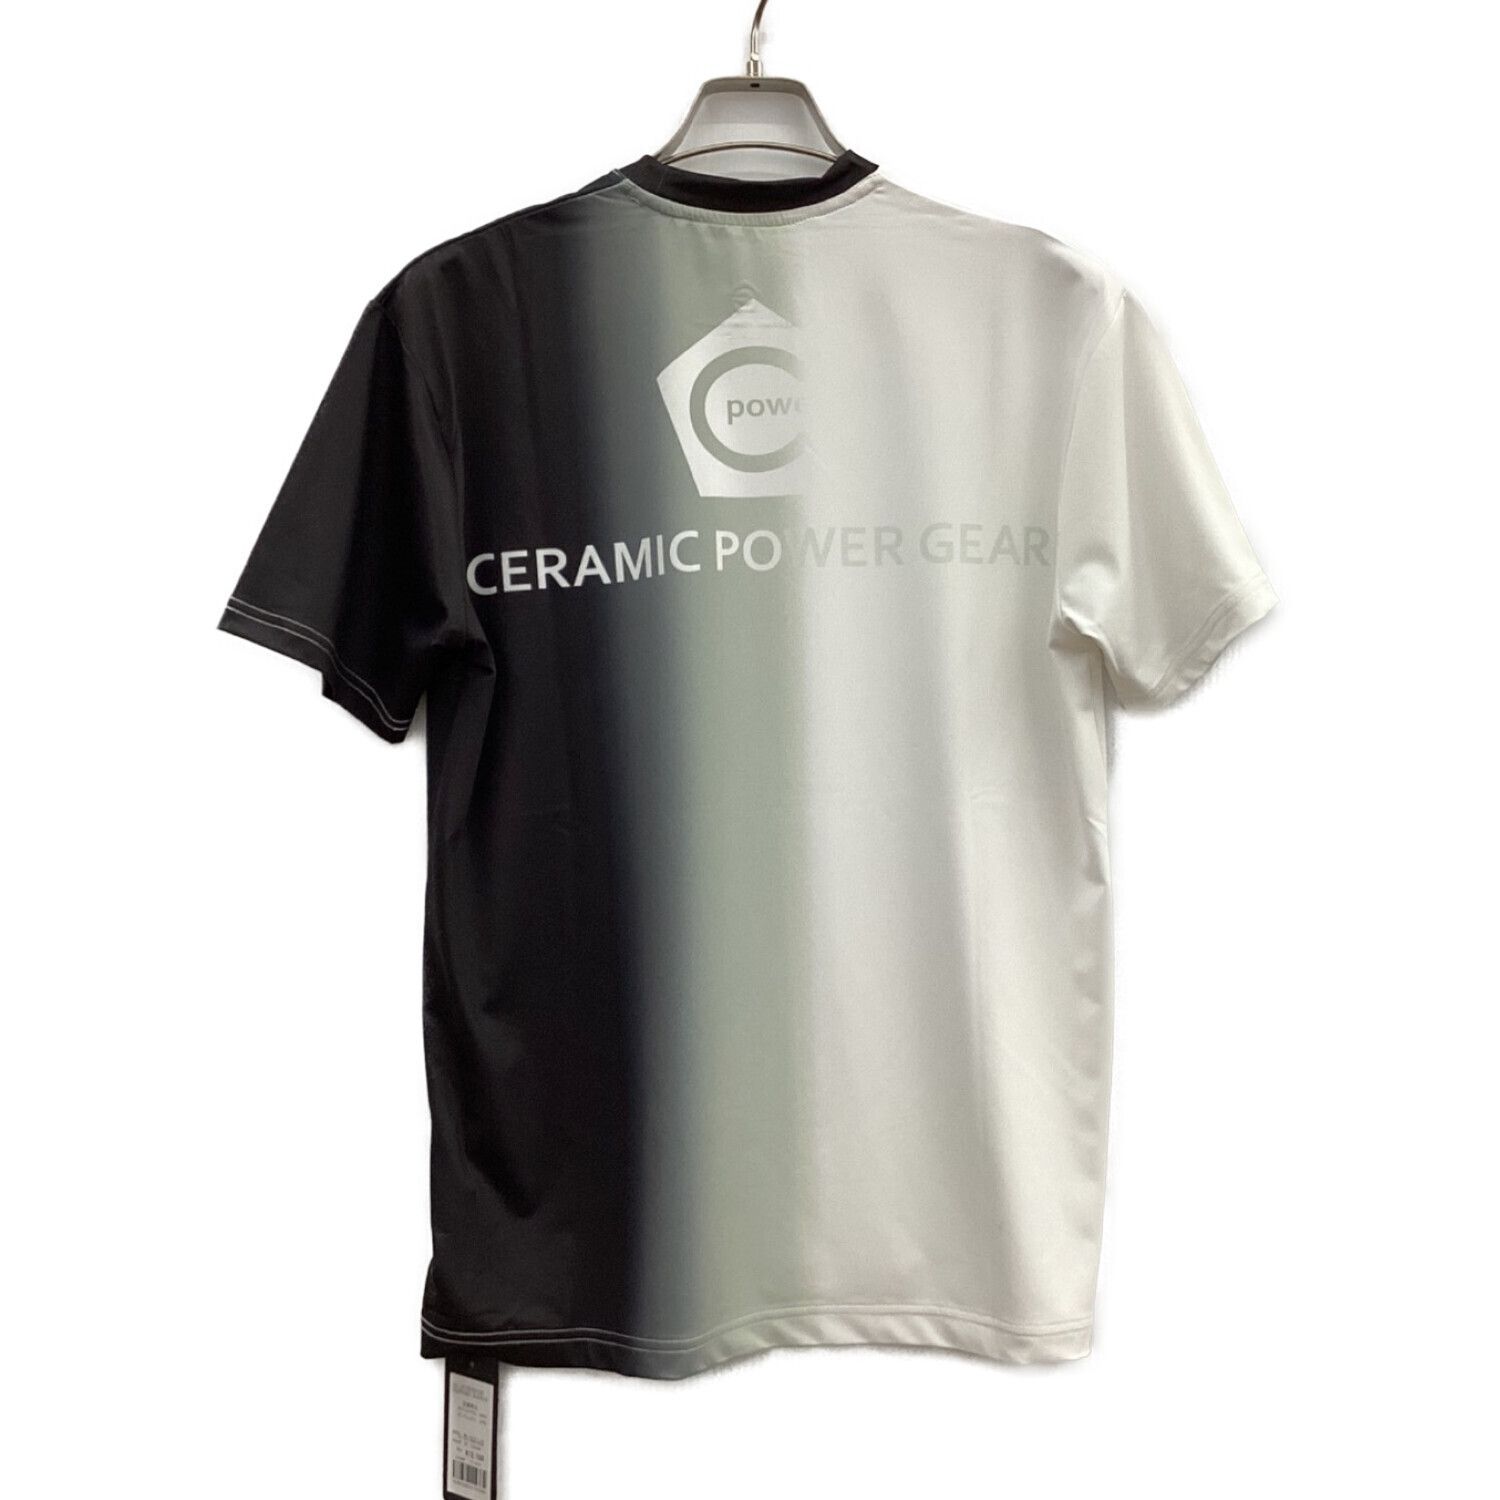 CERAMIC POWER GEAR (セラミックパワーギア) 野球用練習ウェア